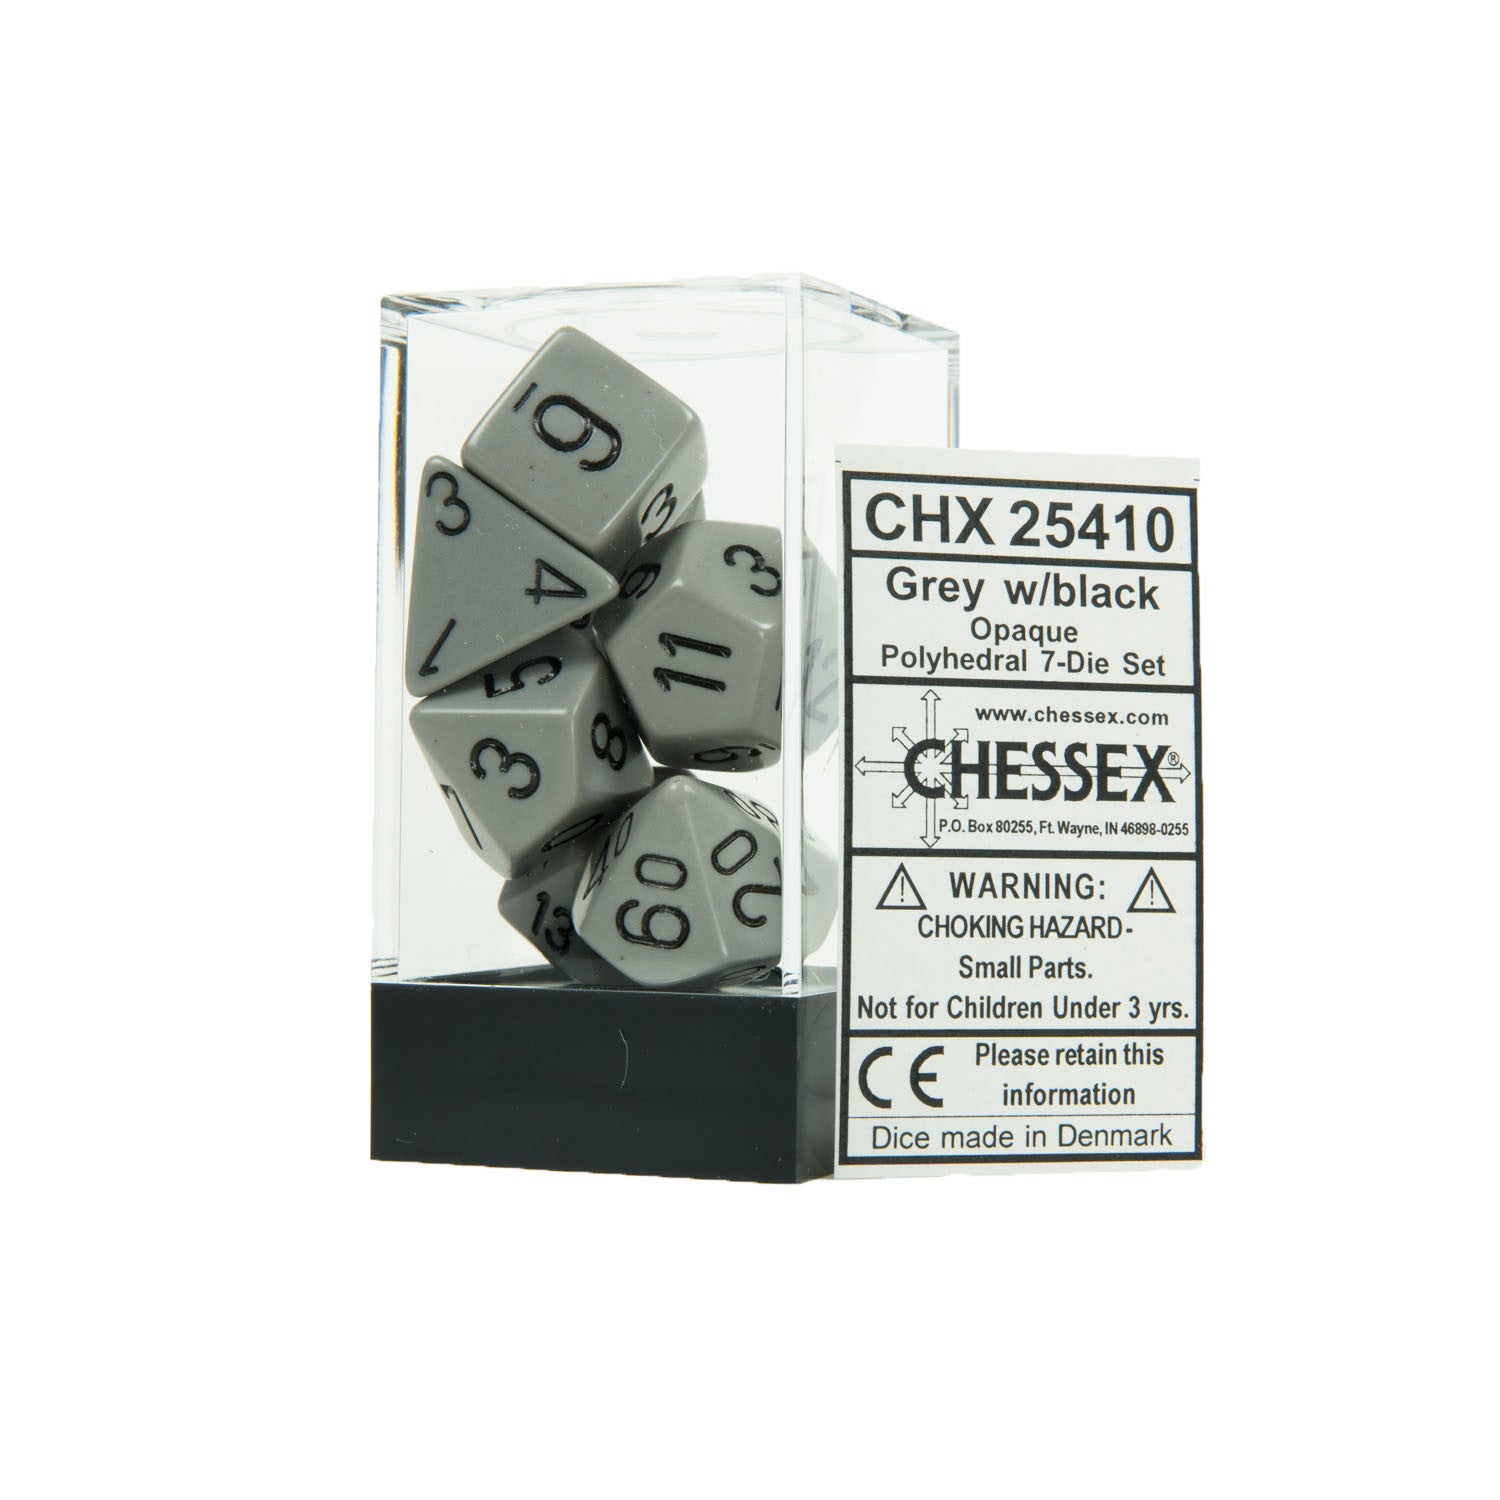 Chessex CHX25410 Opaque Grey w/black Polyhedral Dice Set